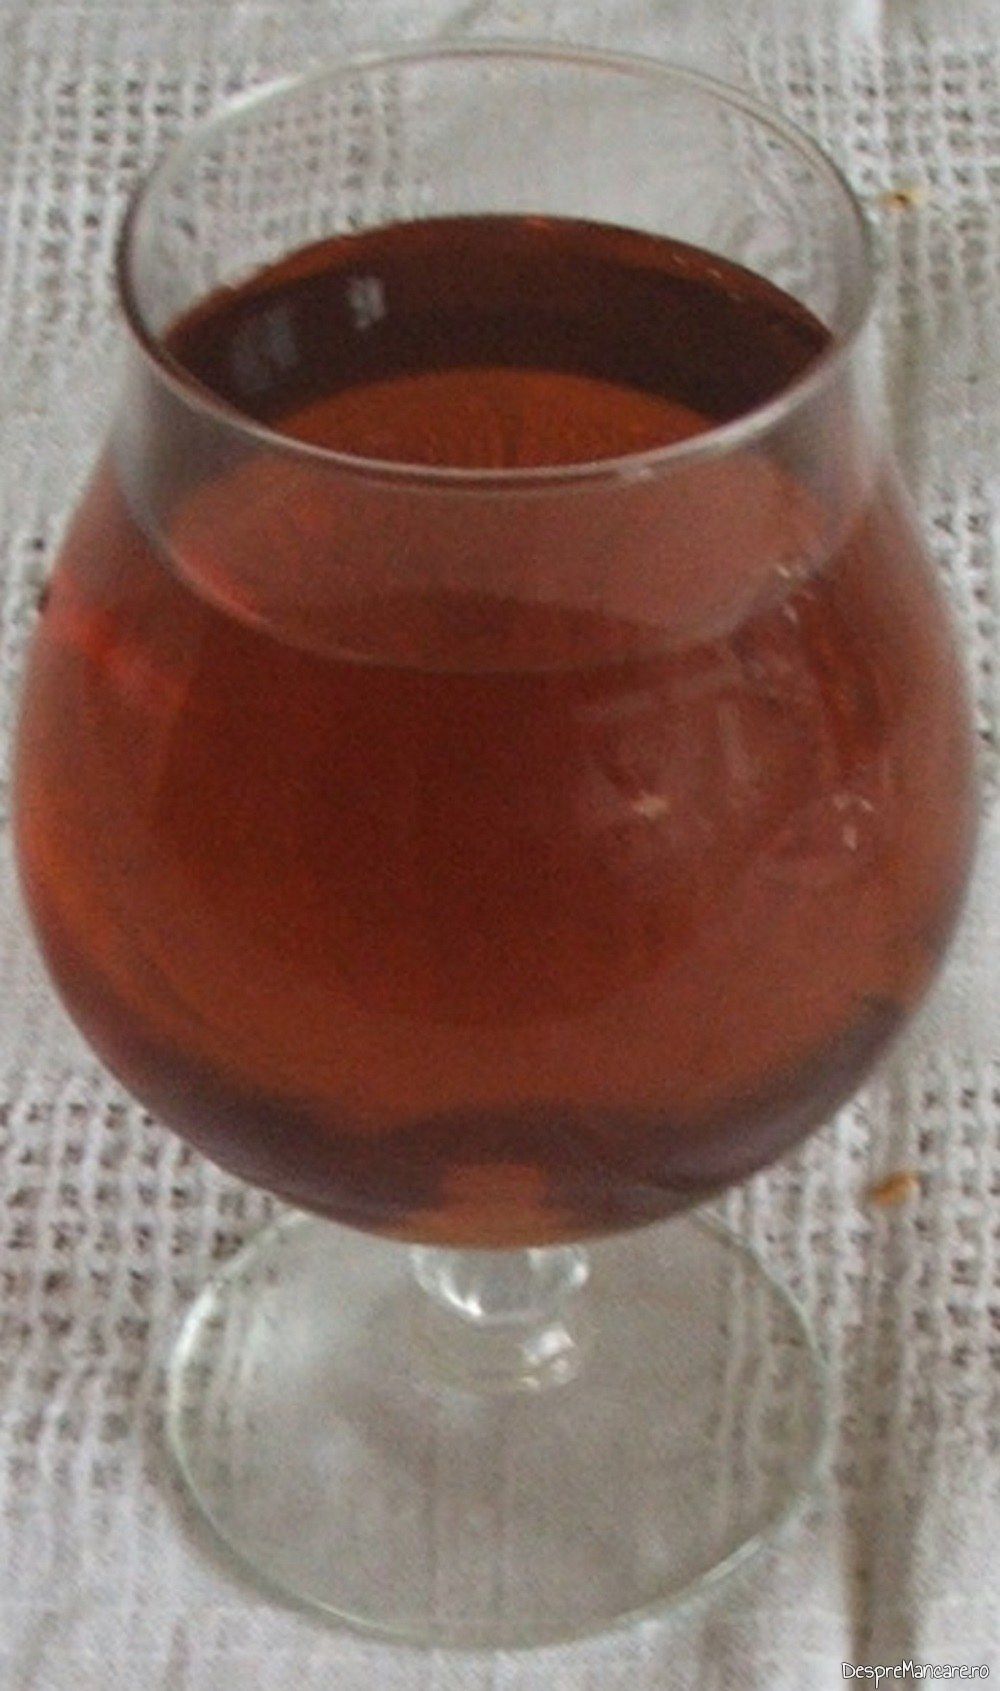 Vinul casei din smochine servit la paste panzerotti umplute cu crab in suc de lamaie si ansoa.